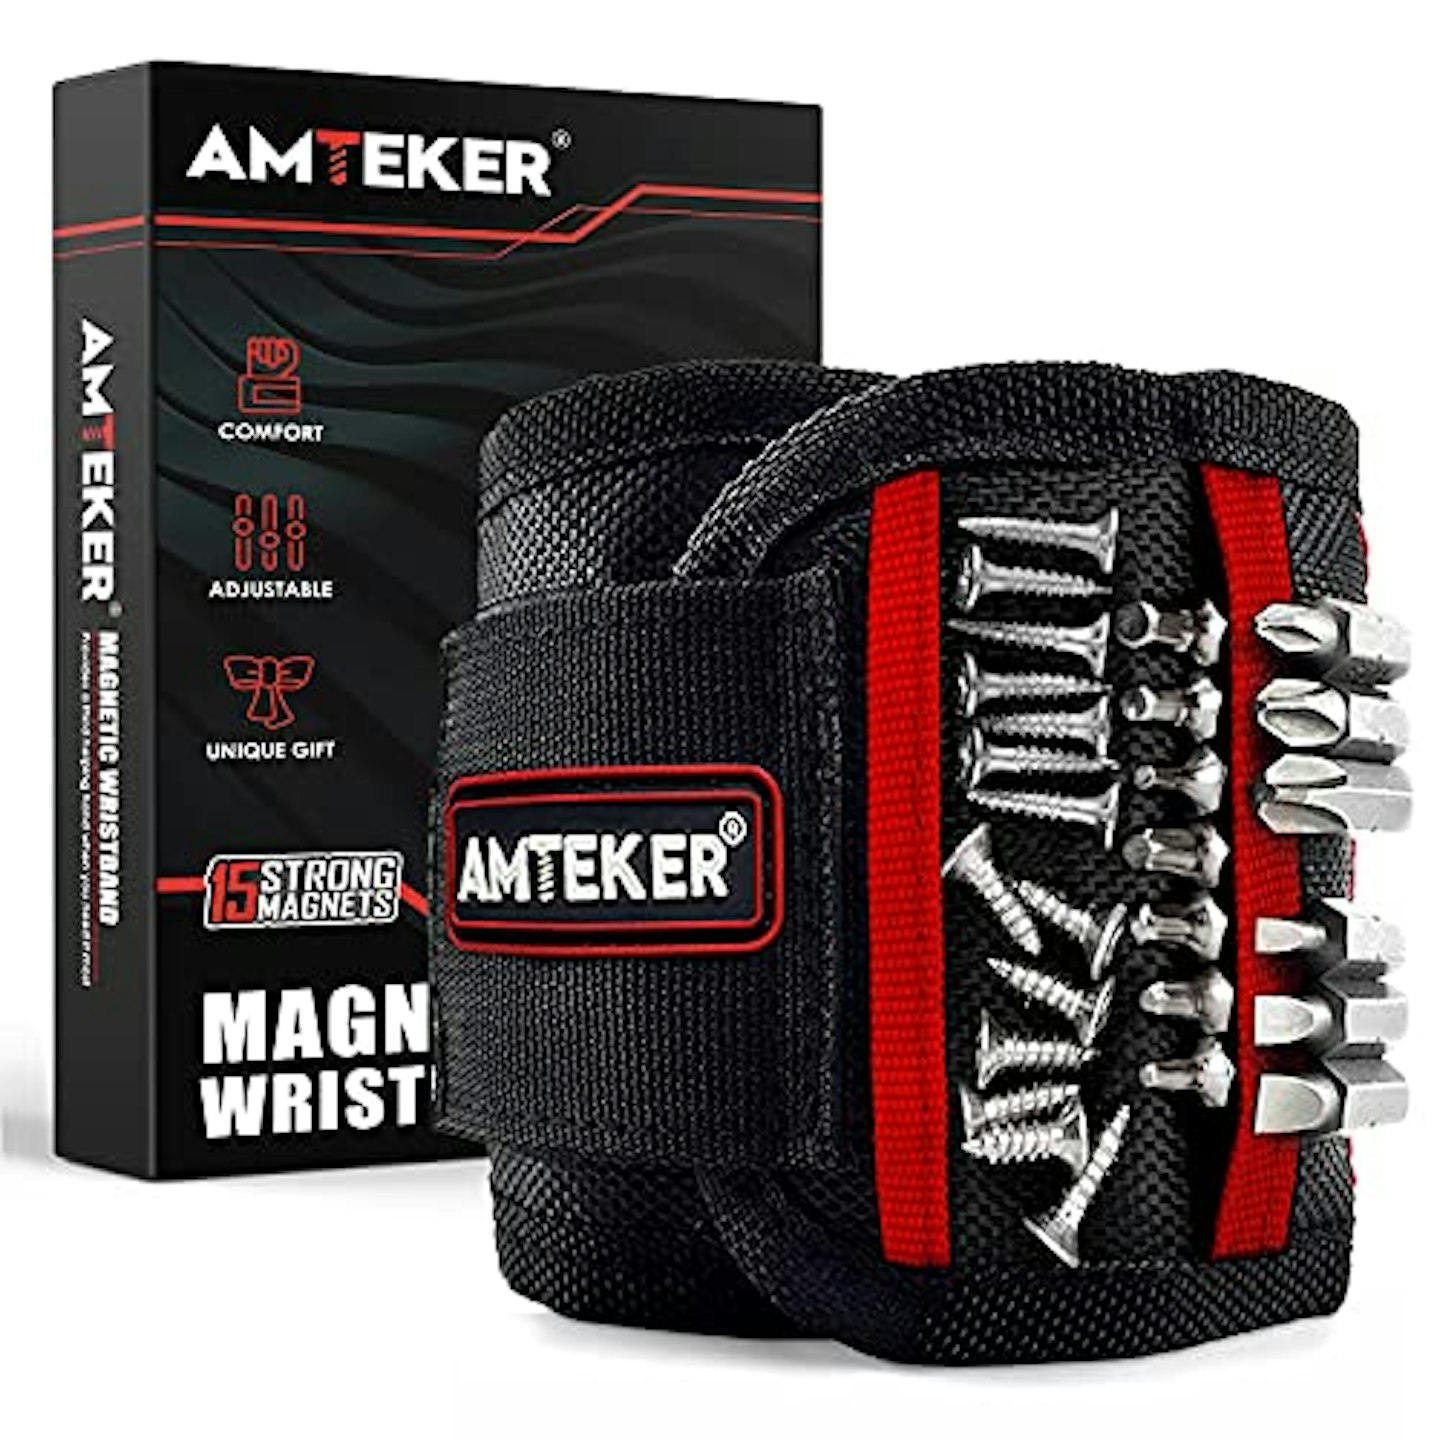 Amteker Magnetic Wristband